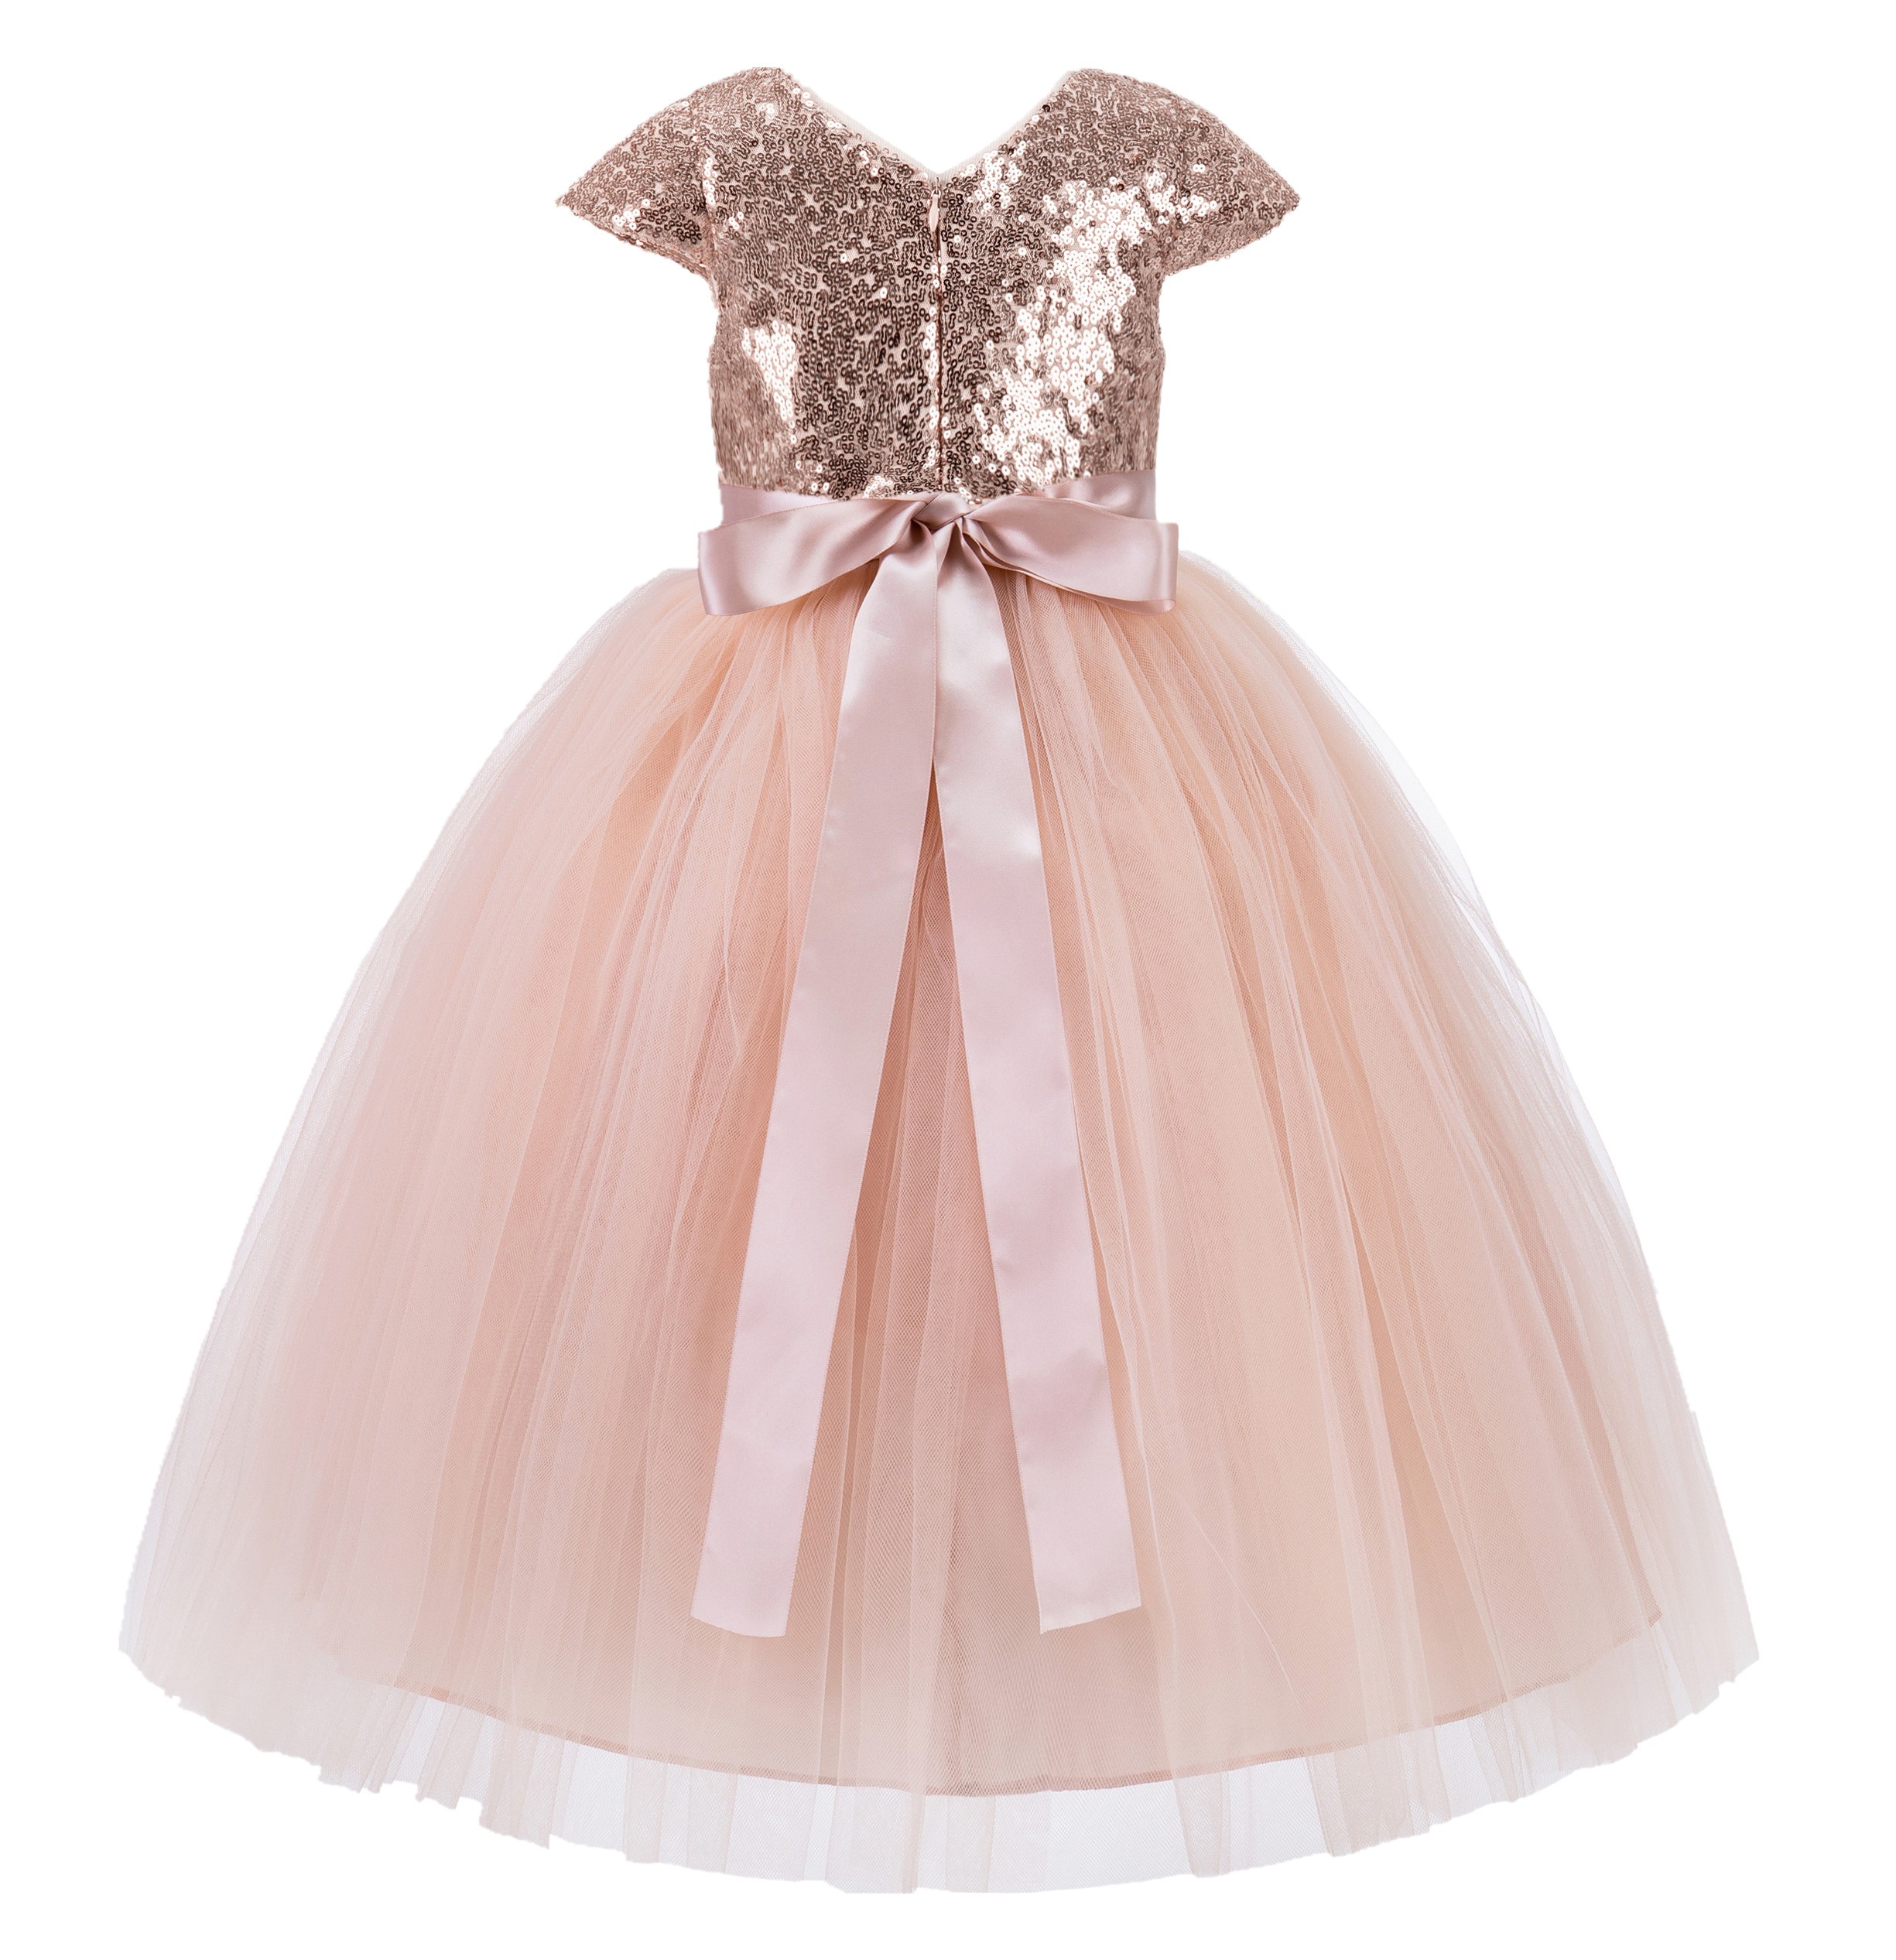 Rose Gold / Blush Pink Cap Sleeves Sequin Flower Girl Dress 211